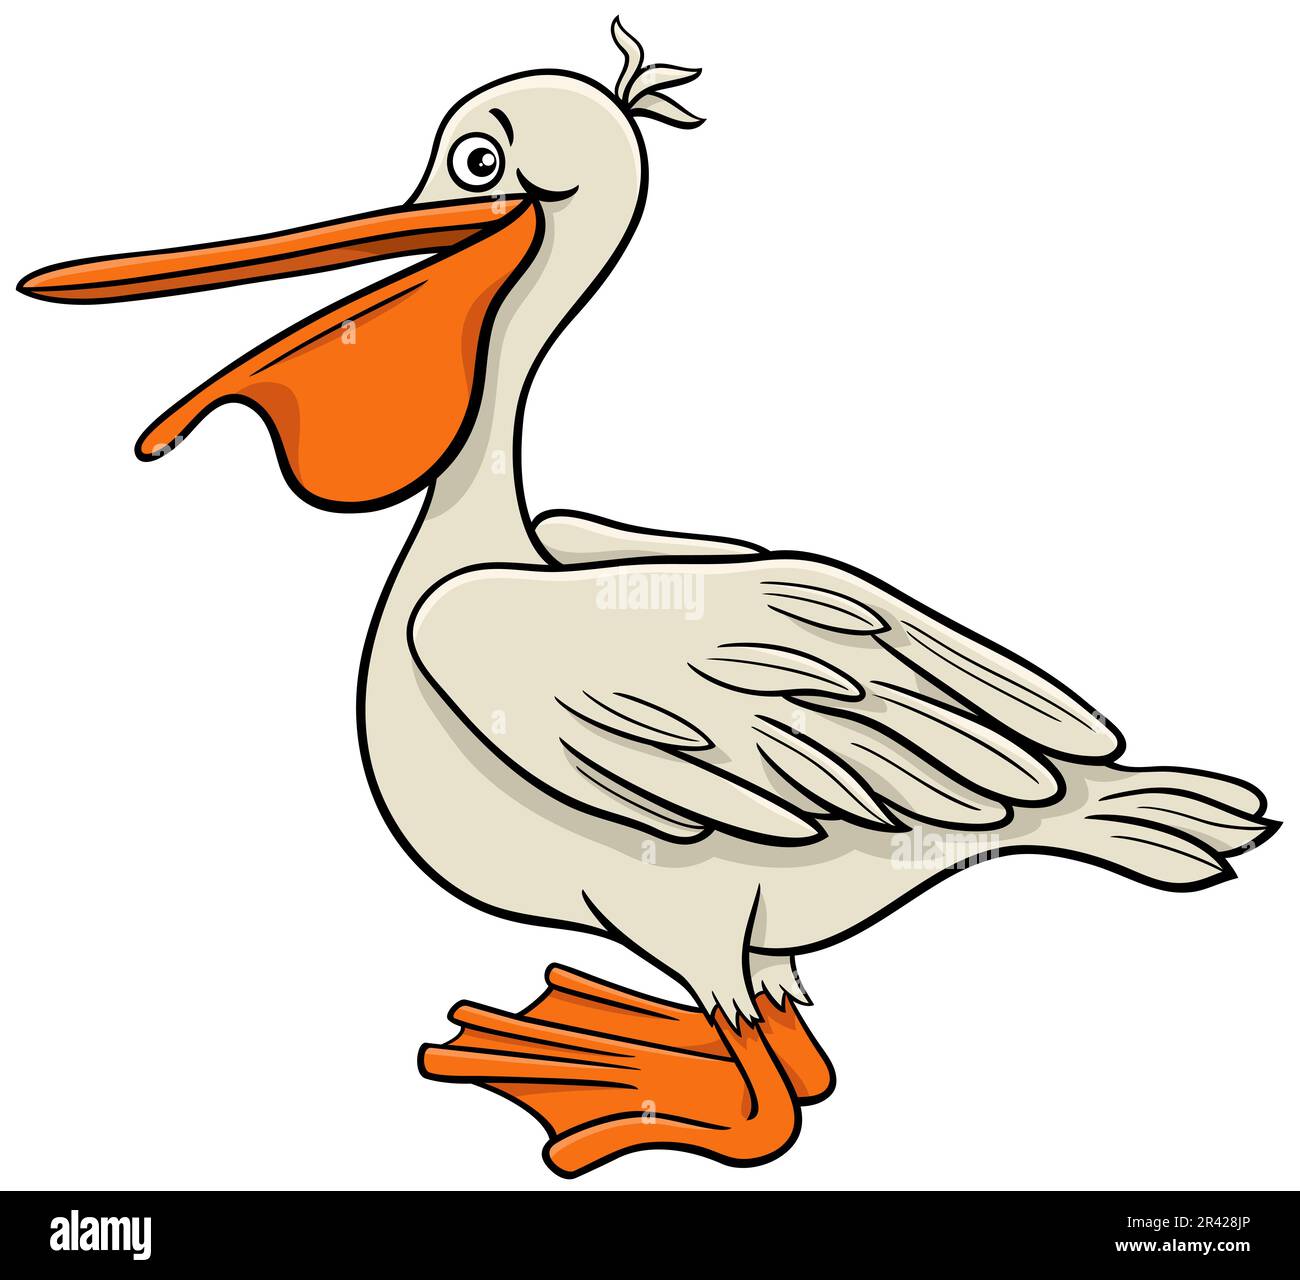 Pelican bird animal character cartoon illustration Stock Photo - Alamy